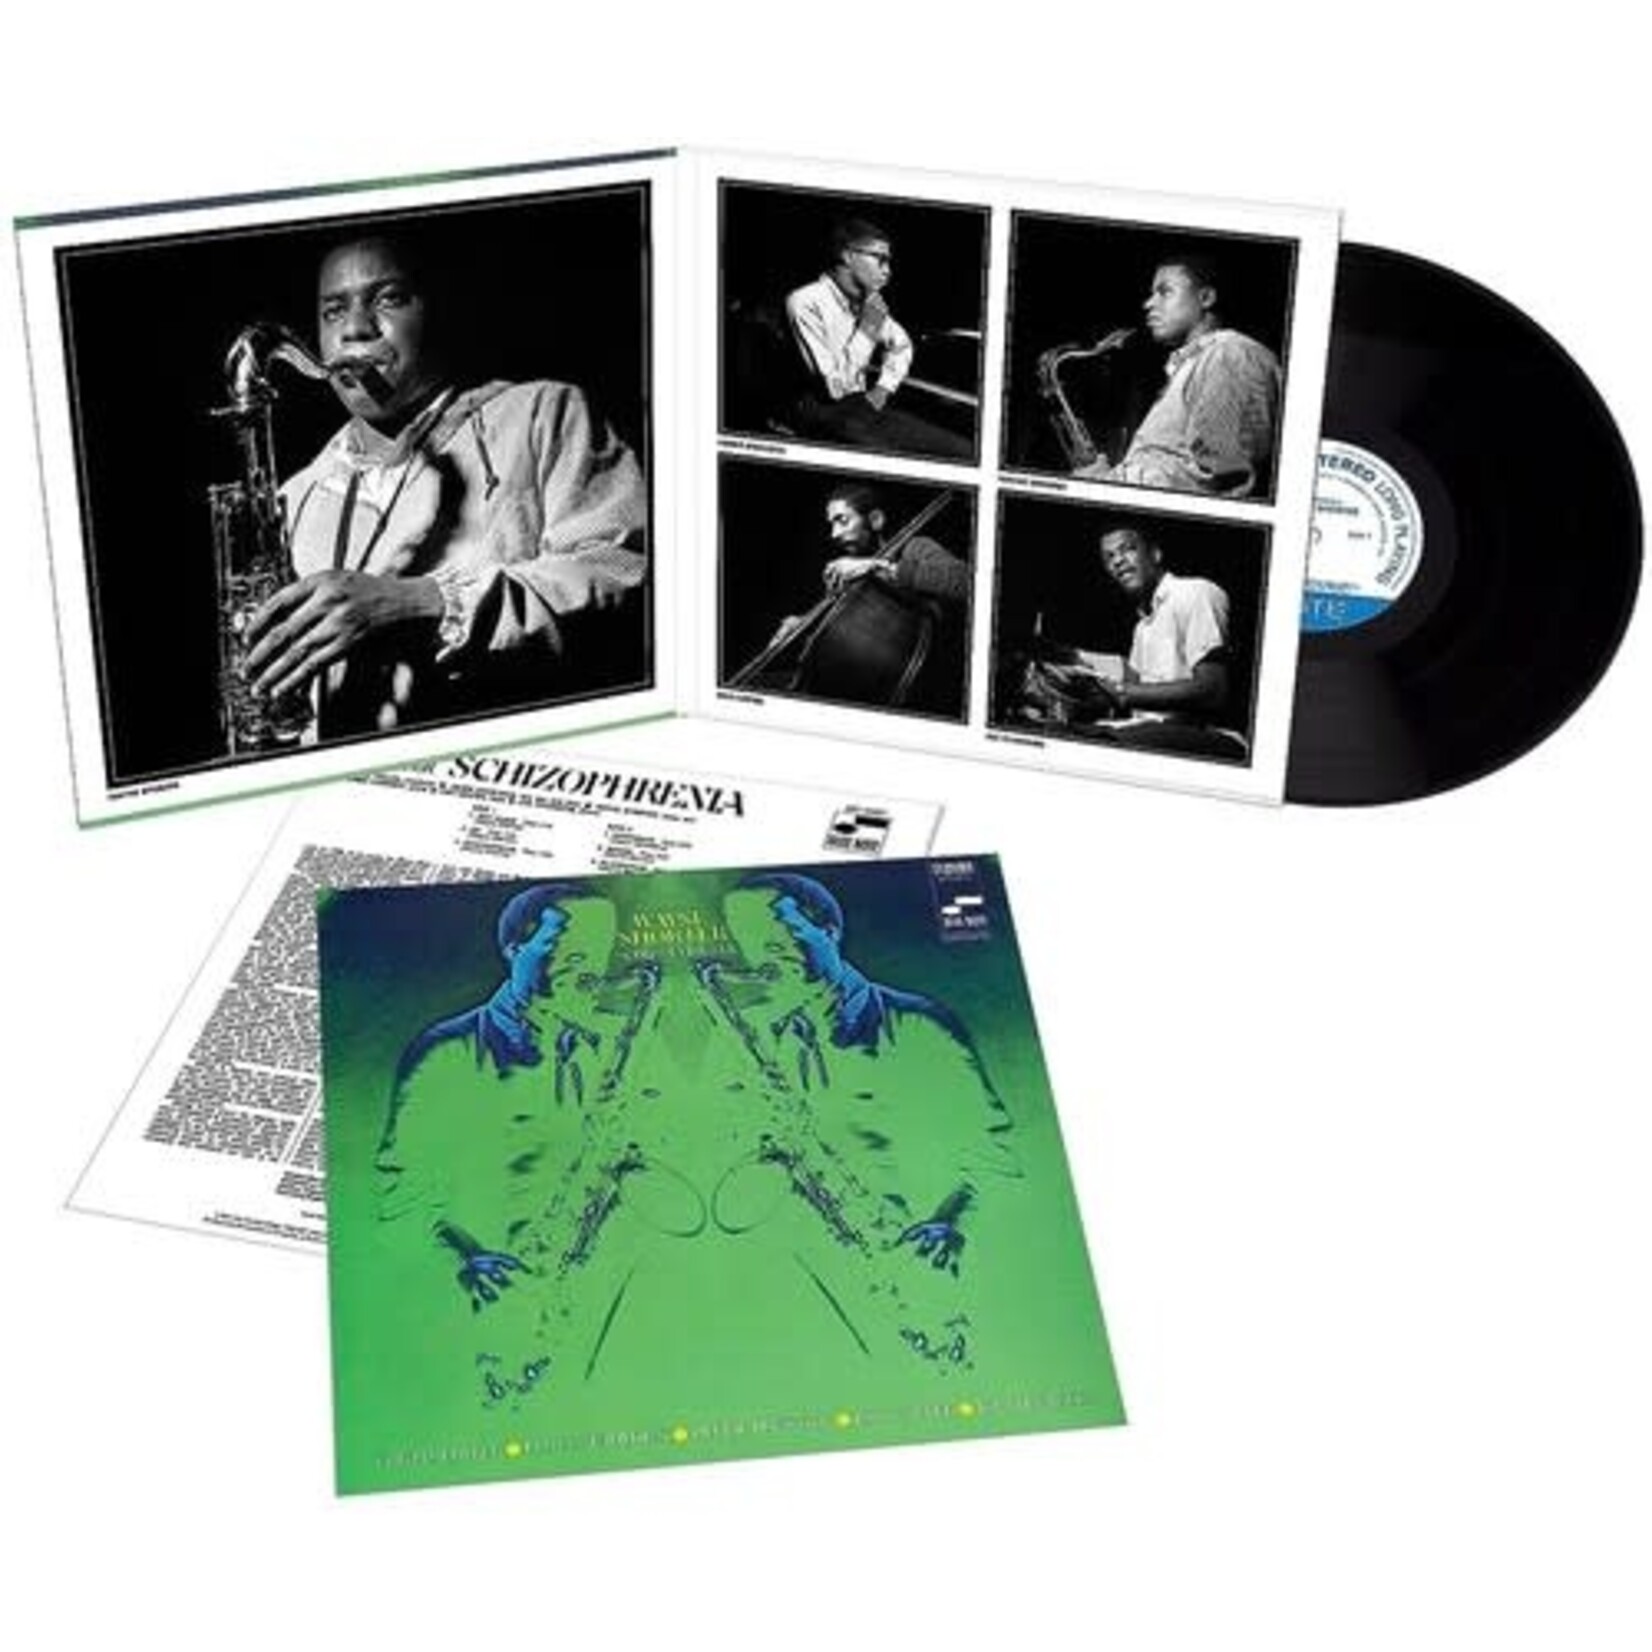 Wayne Shorter - Schizophrenia (Tone Poet) - BLUNB003669201 - Vinyl LP (NEW)